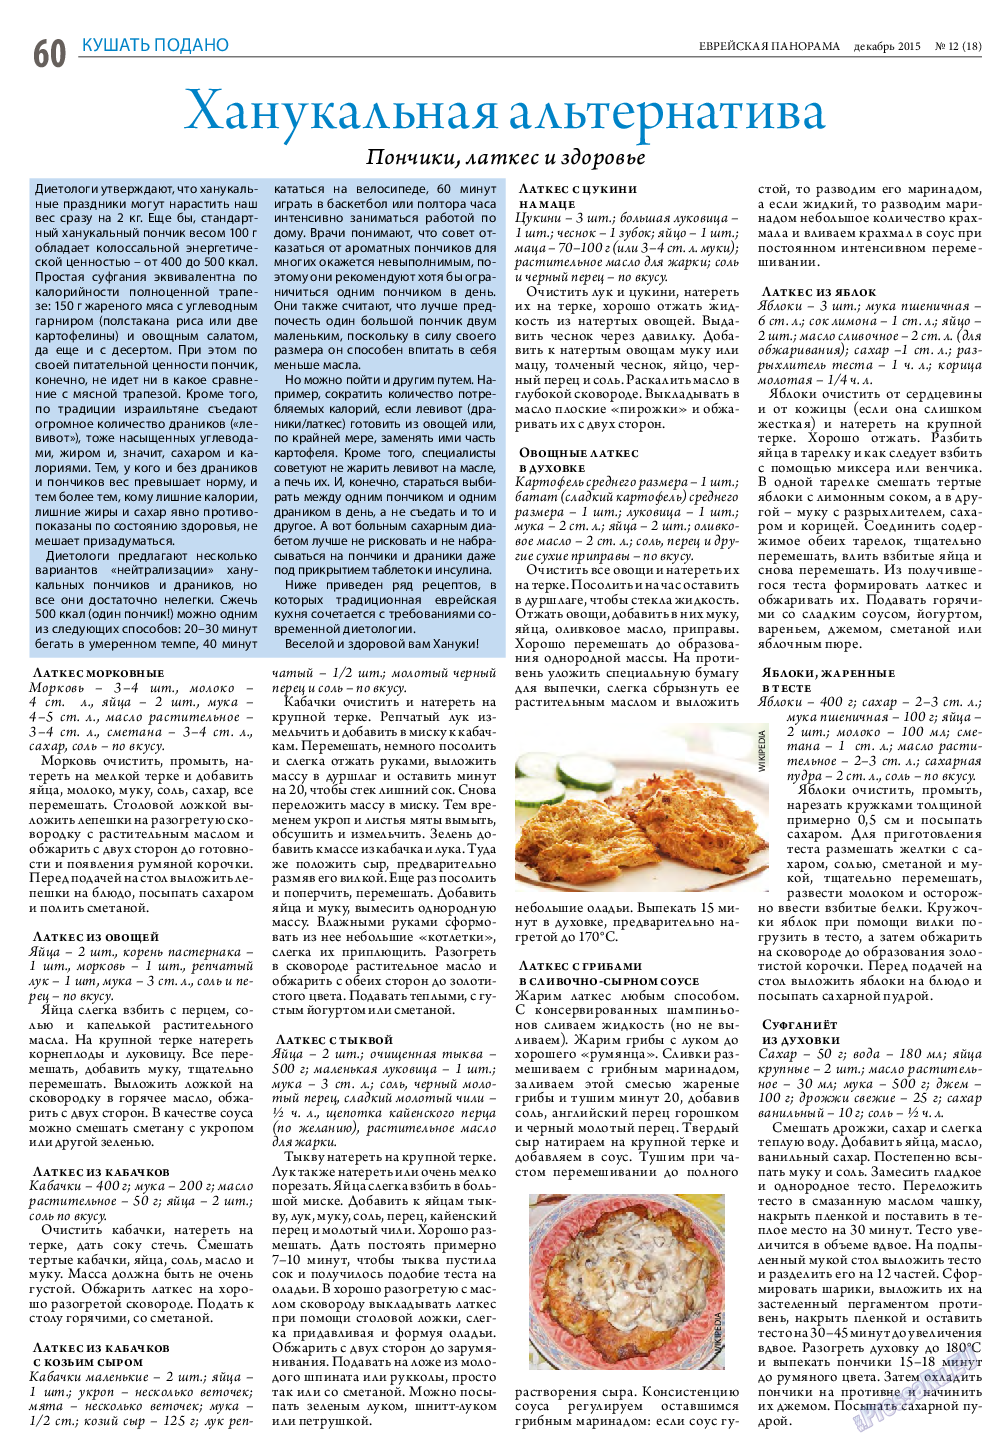 Еврейская панорама, газета. 2015 №12 стр.60